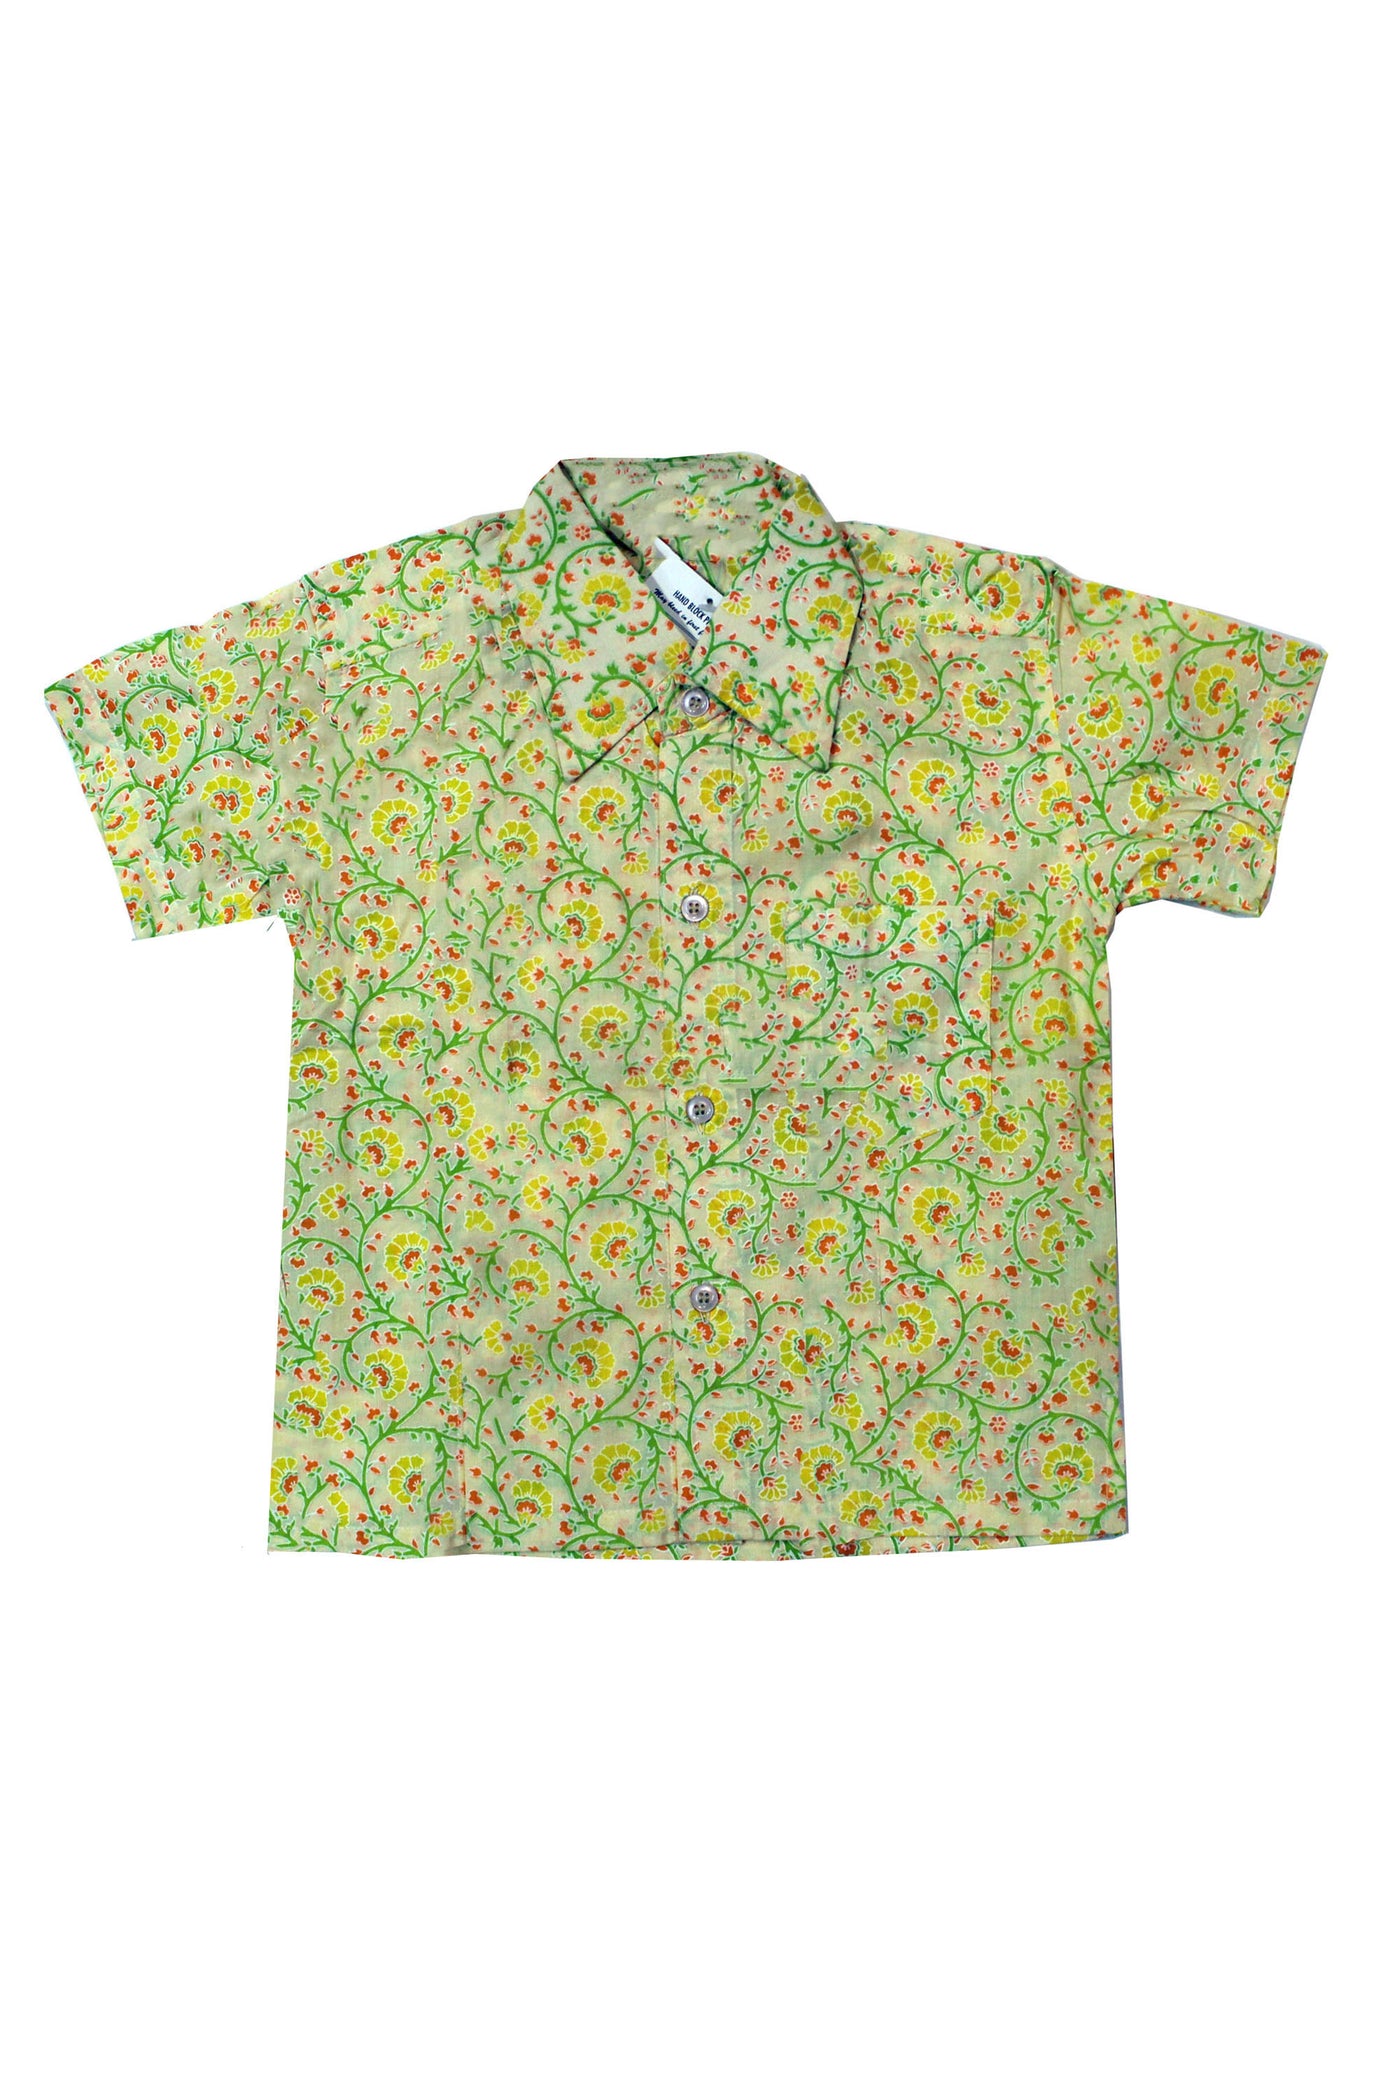 Cotton Flower Jaal Print Boys Shirt in Green